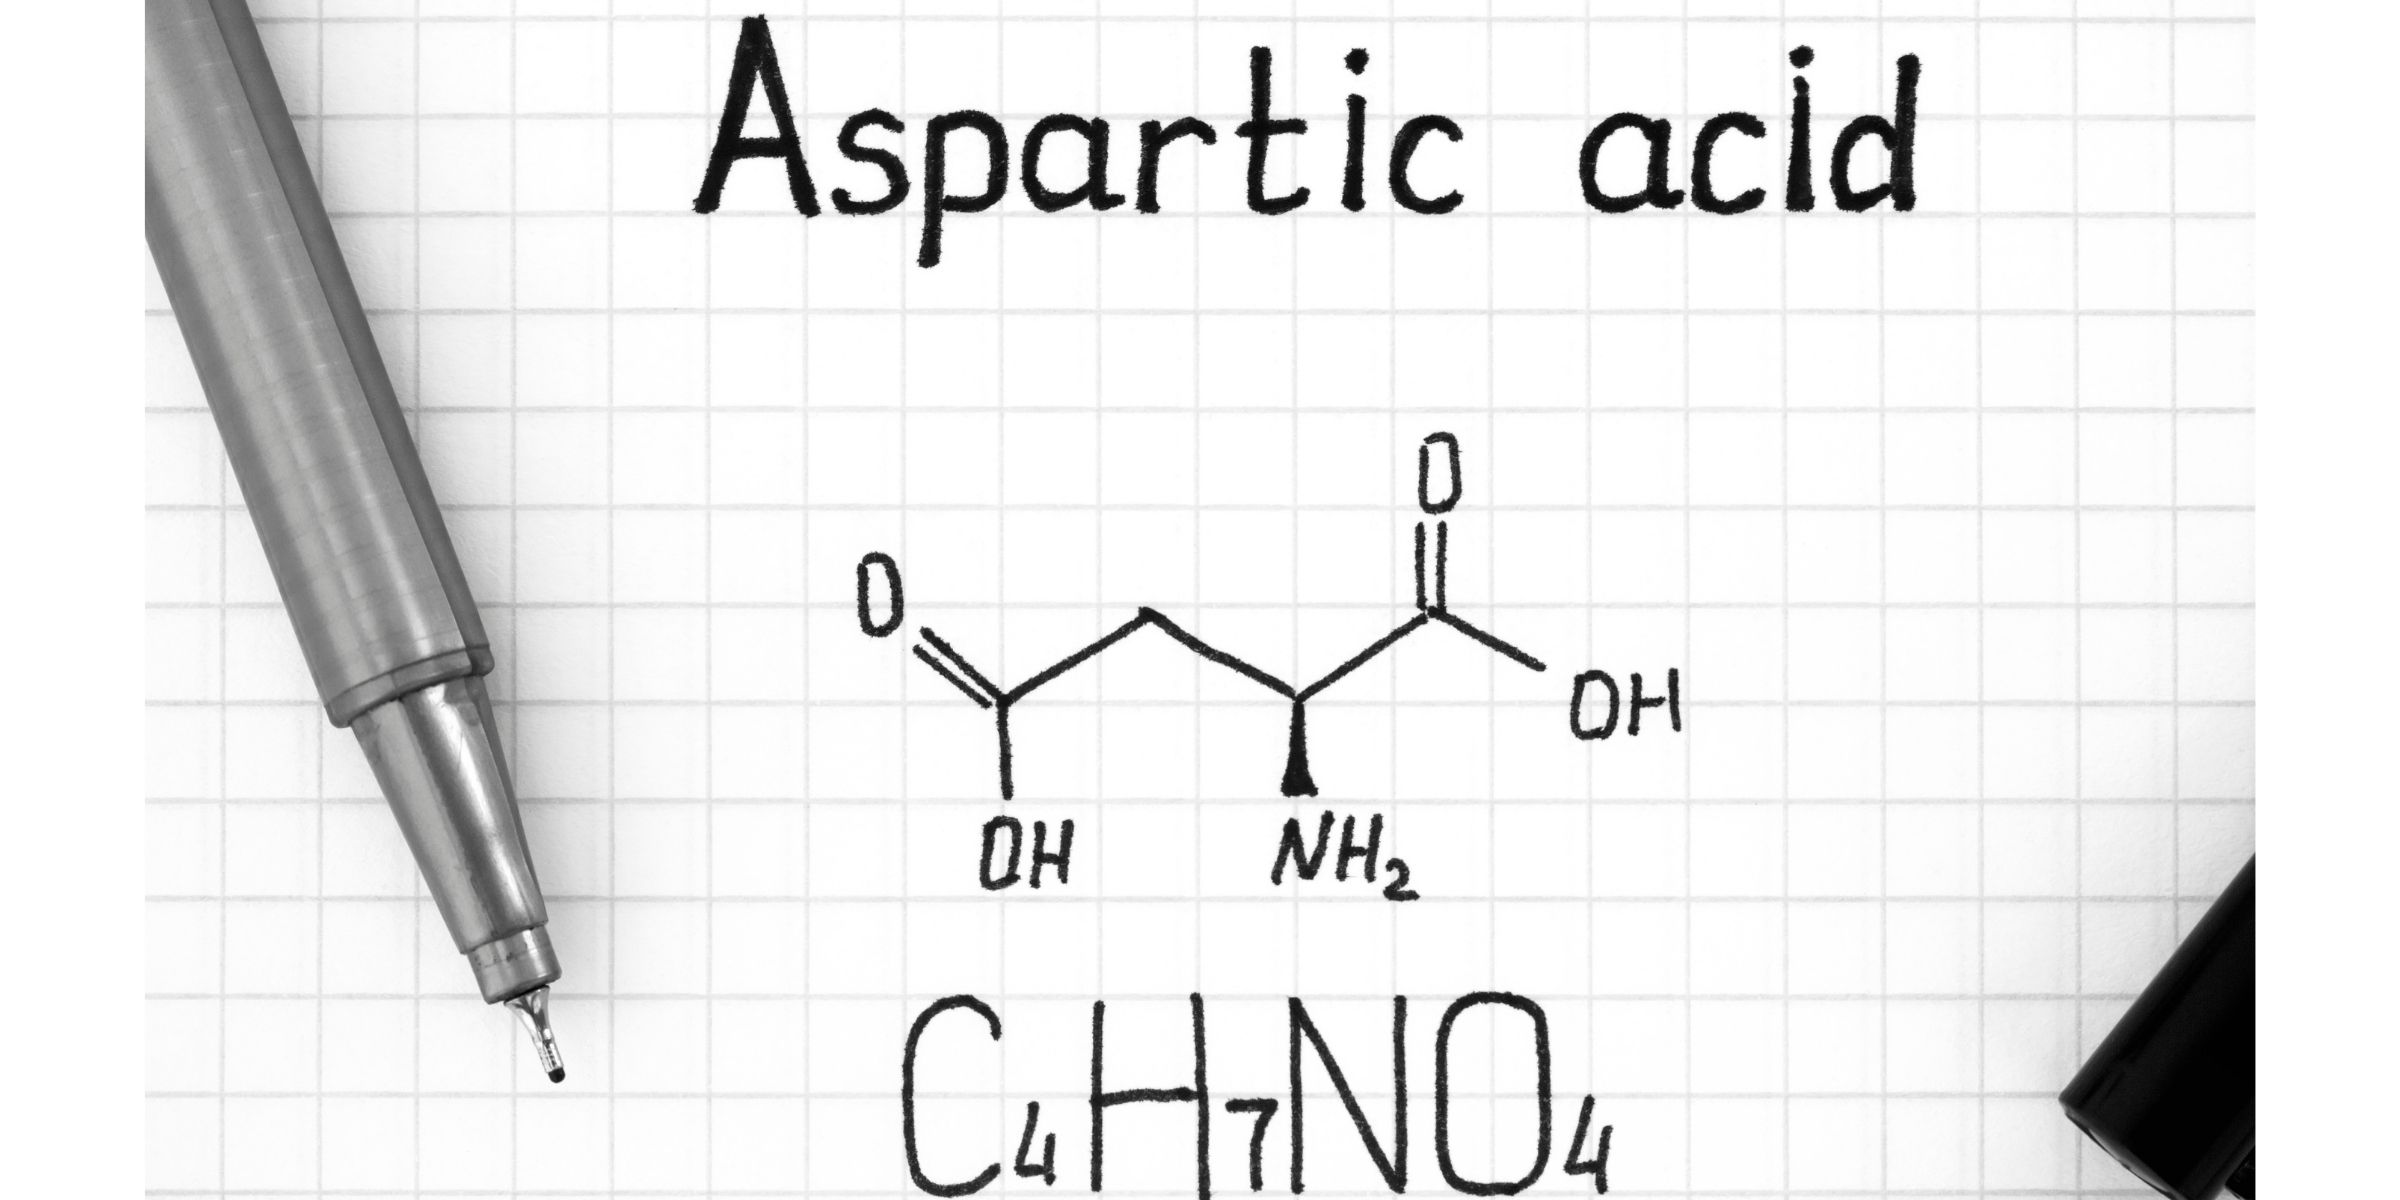 Asparatic acid